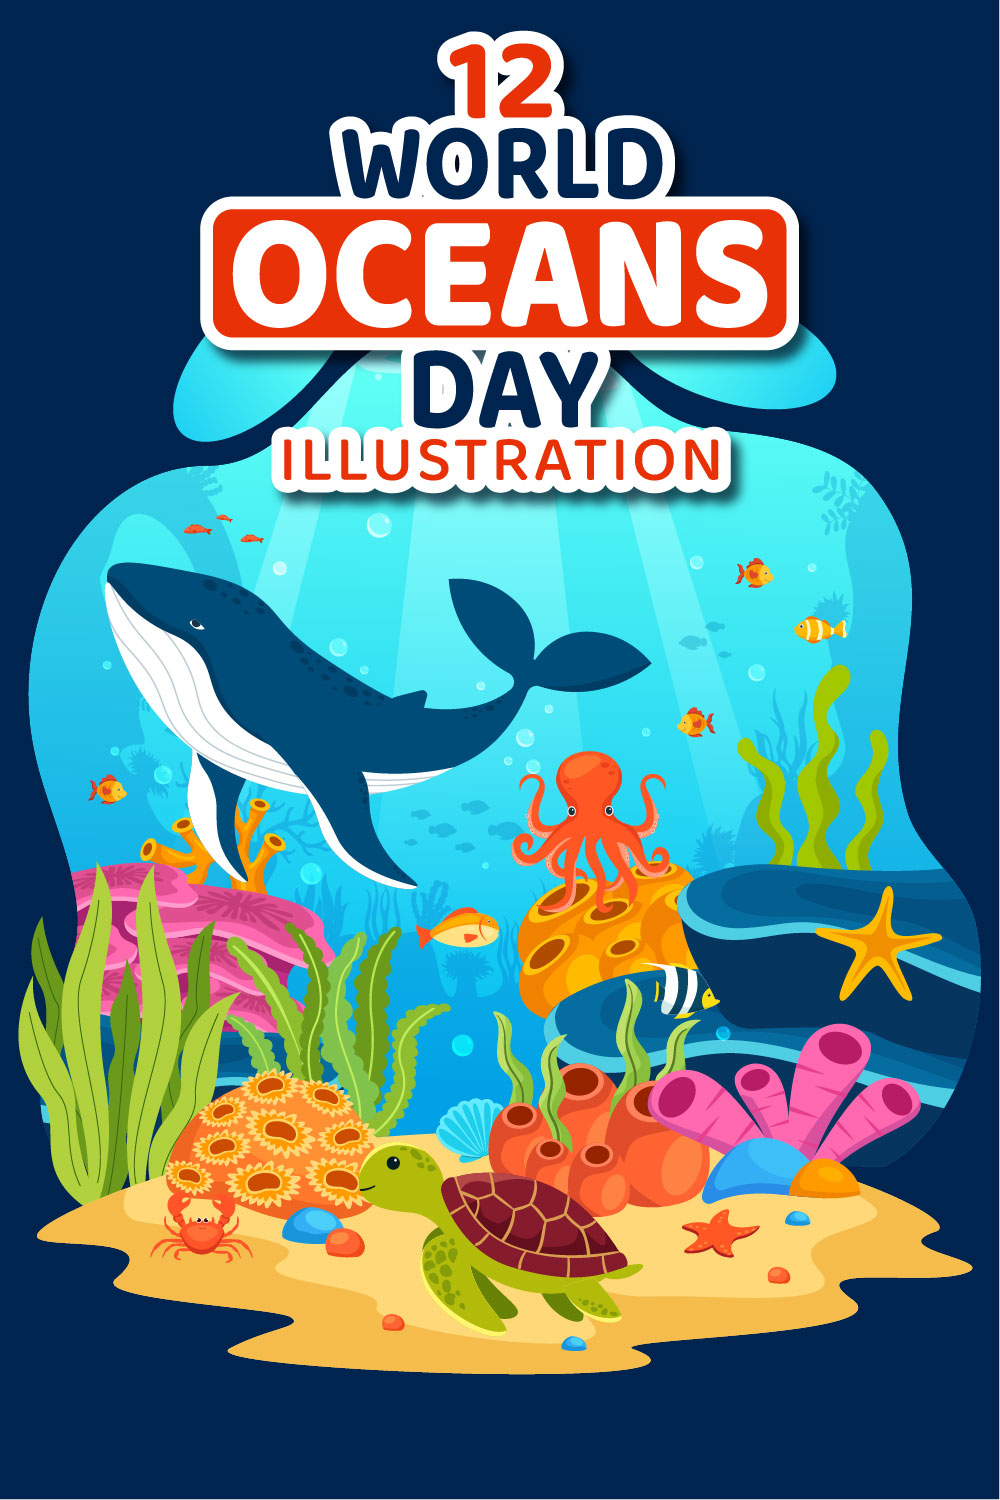 12 World Oceans Day Illustration pinterest preview image.